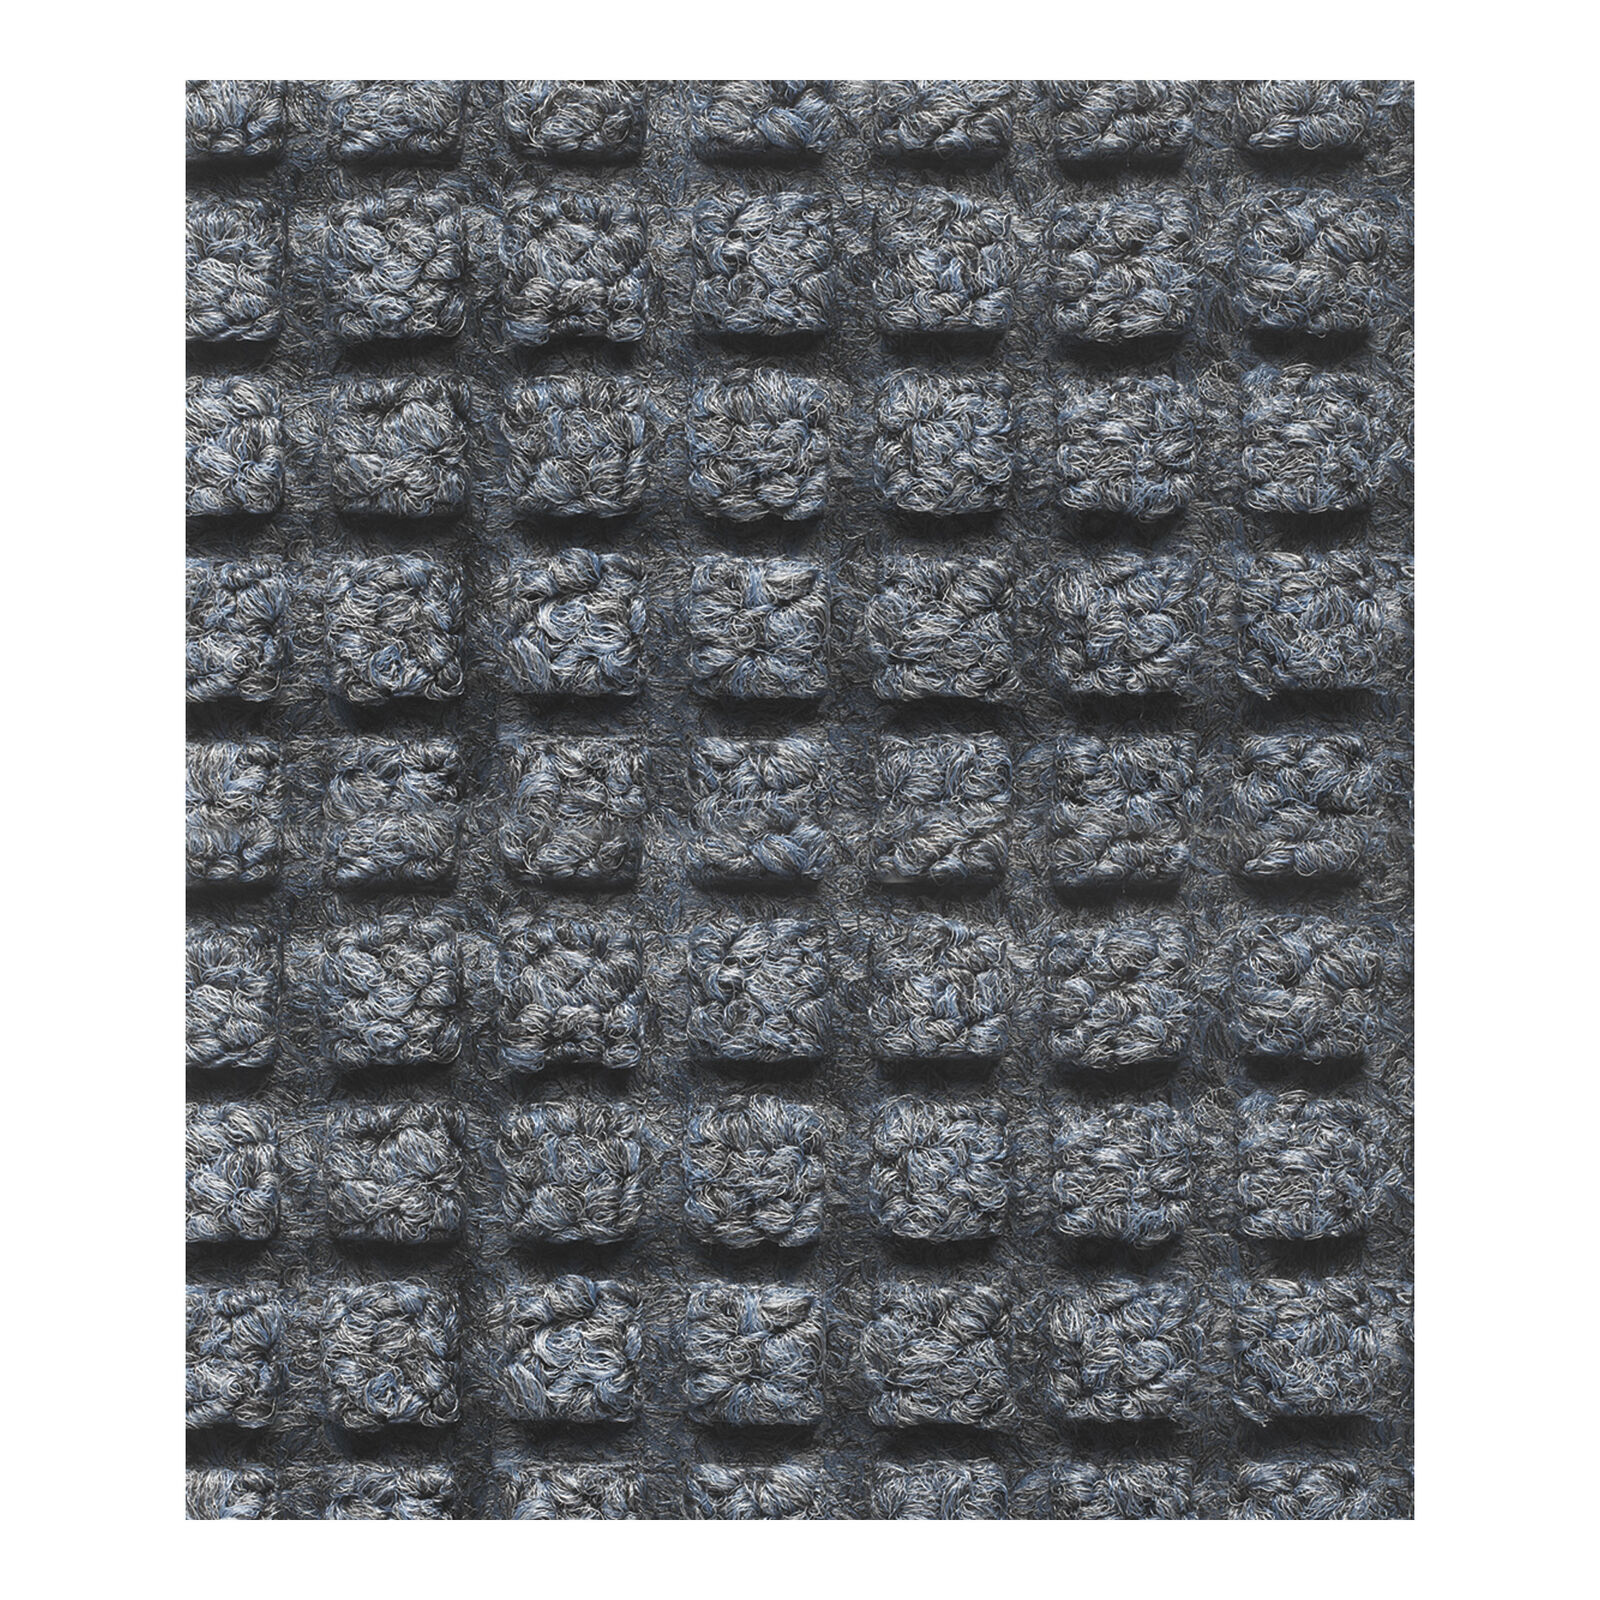 Notrax Guzzler Floor Matting - 3ft. X 5ft Slate Blue, Model# 166s0035bu